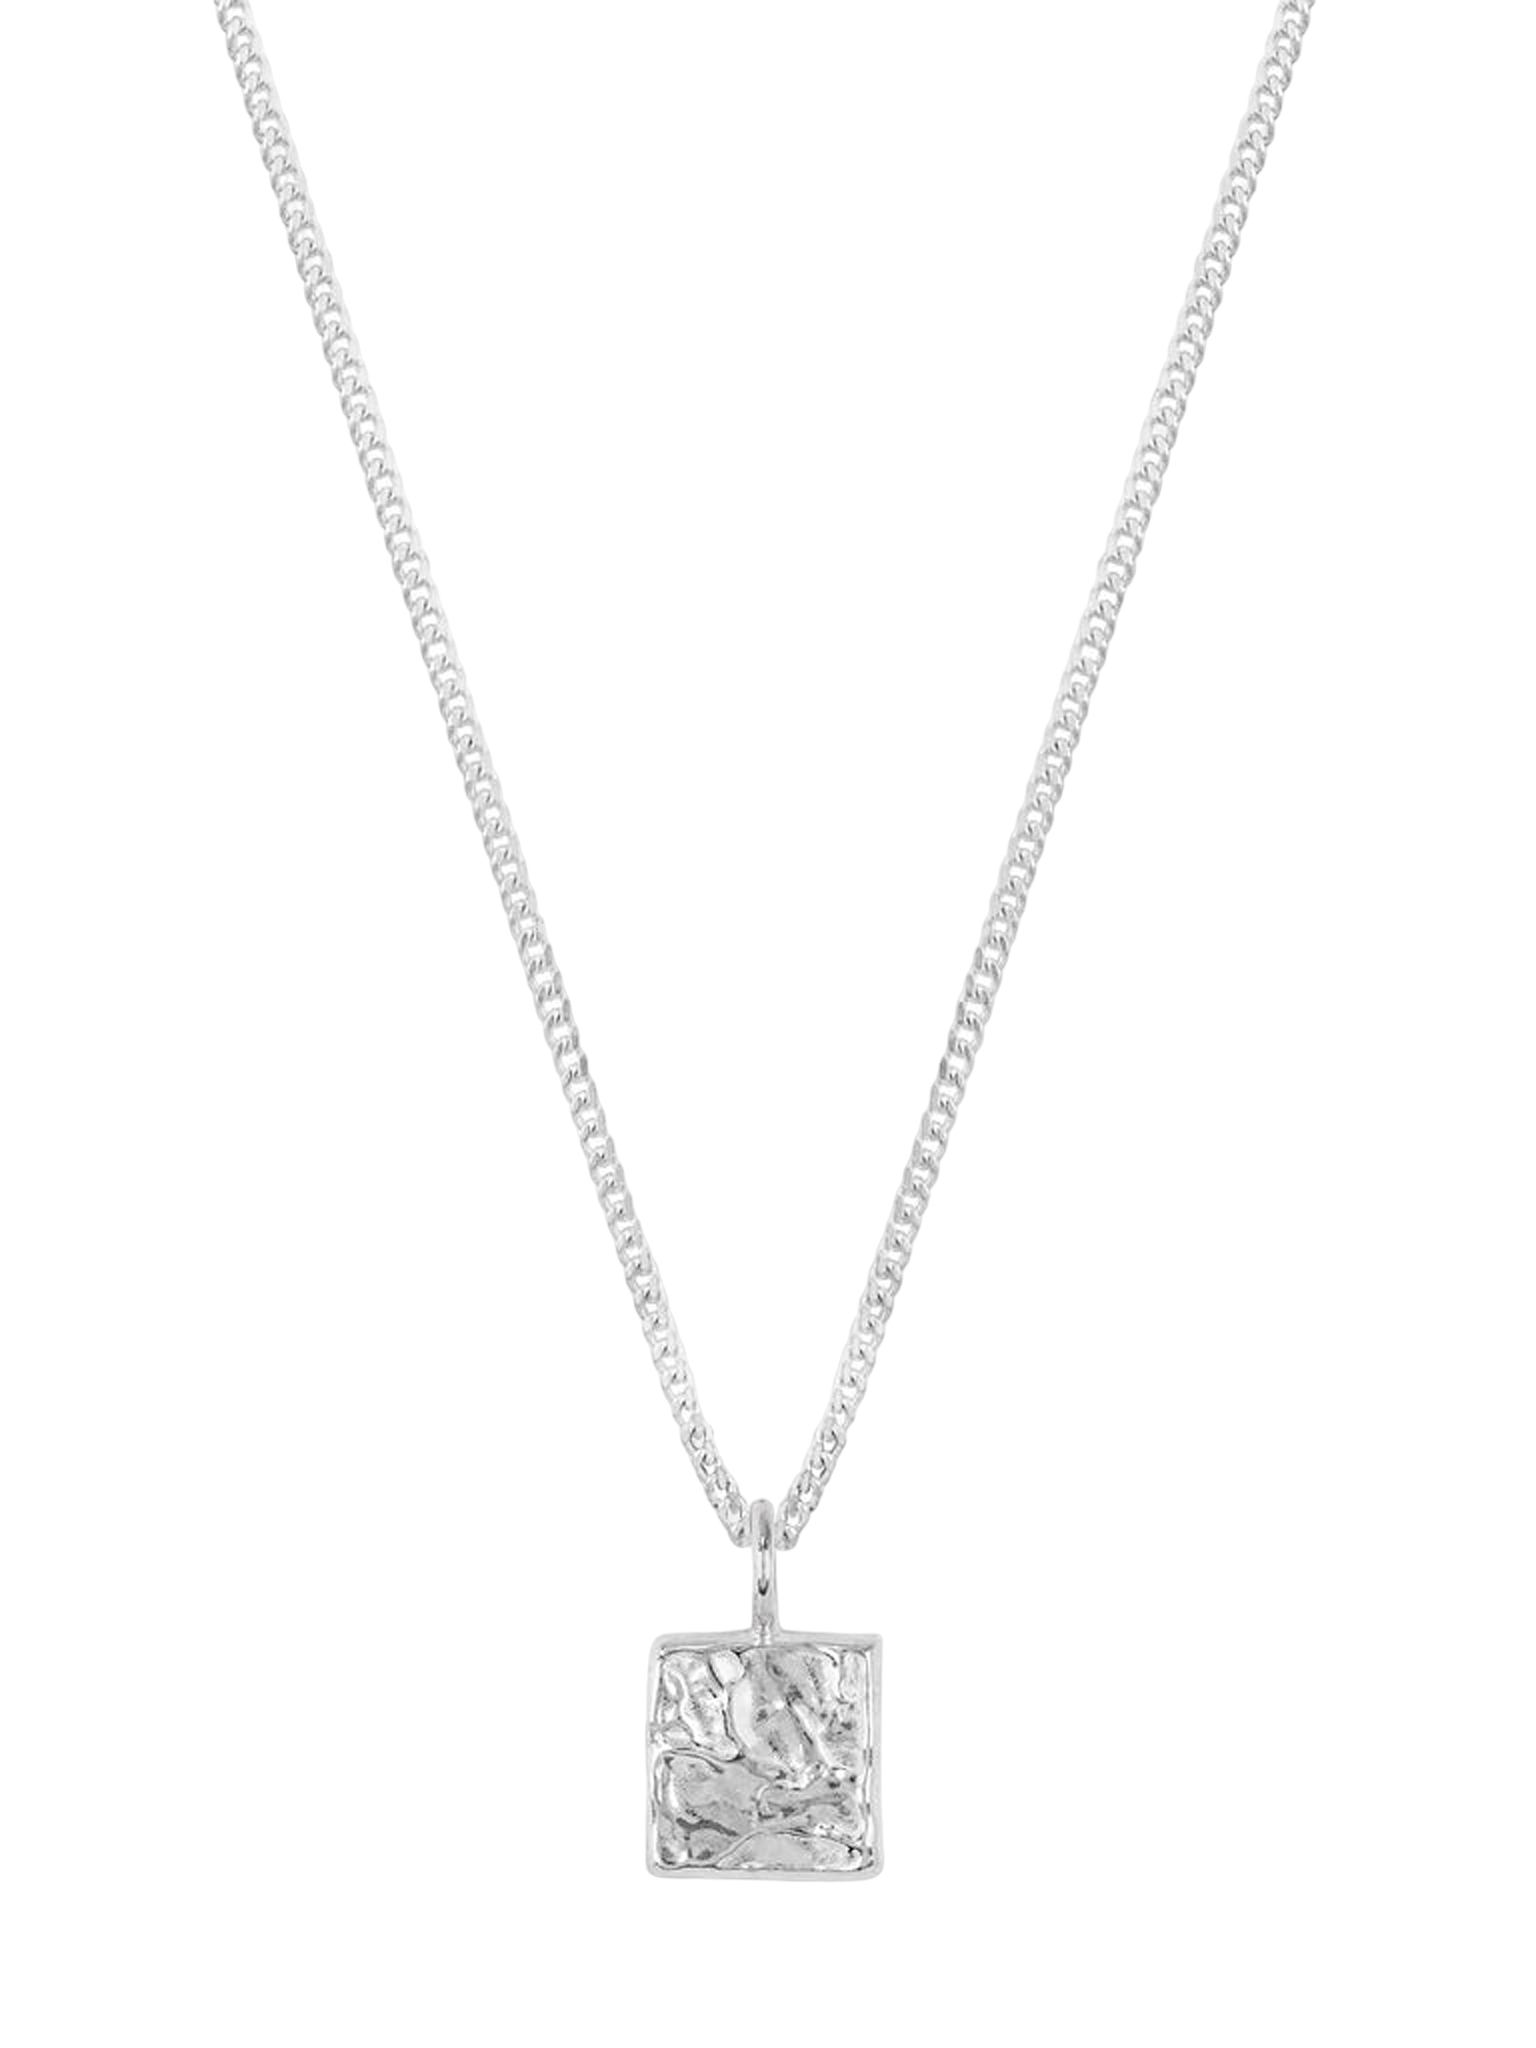 Organic square pendant necklace